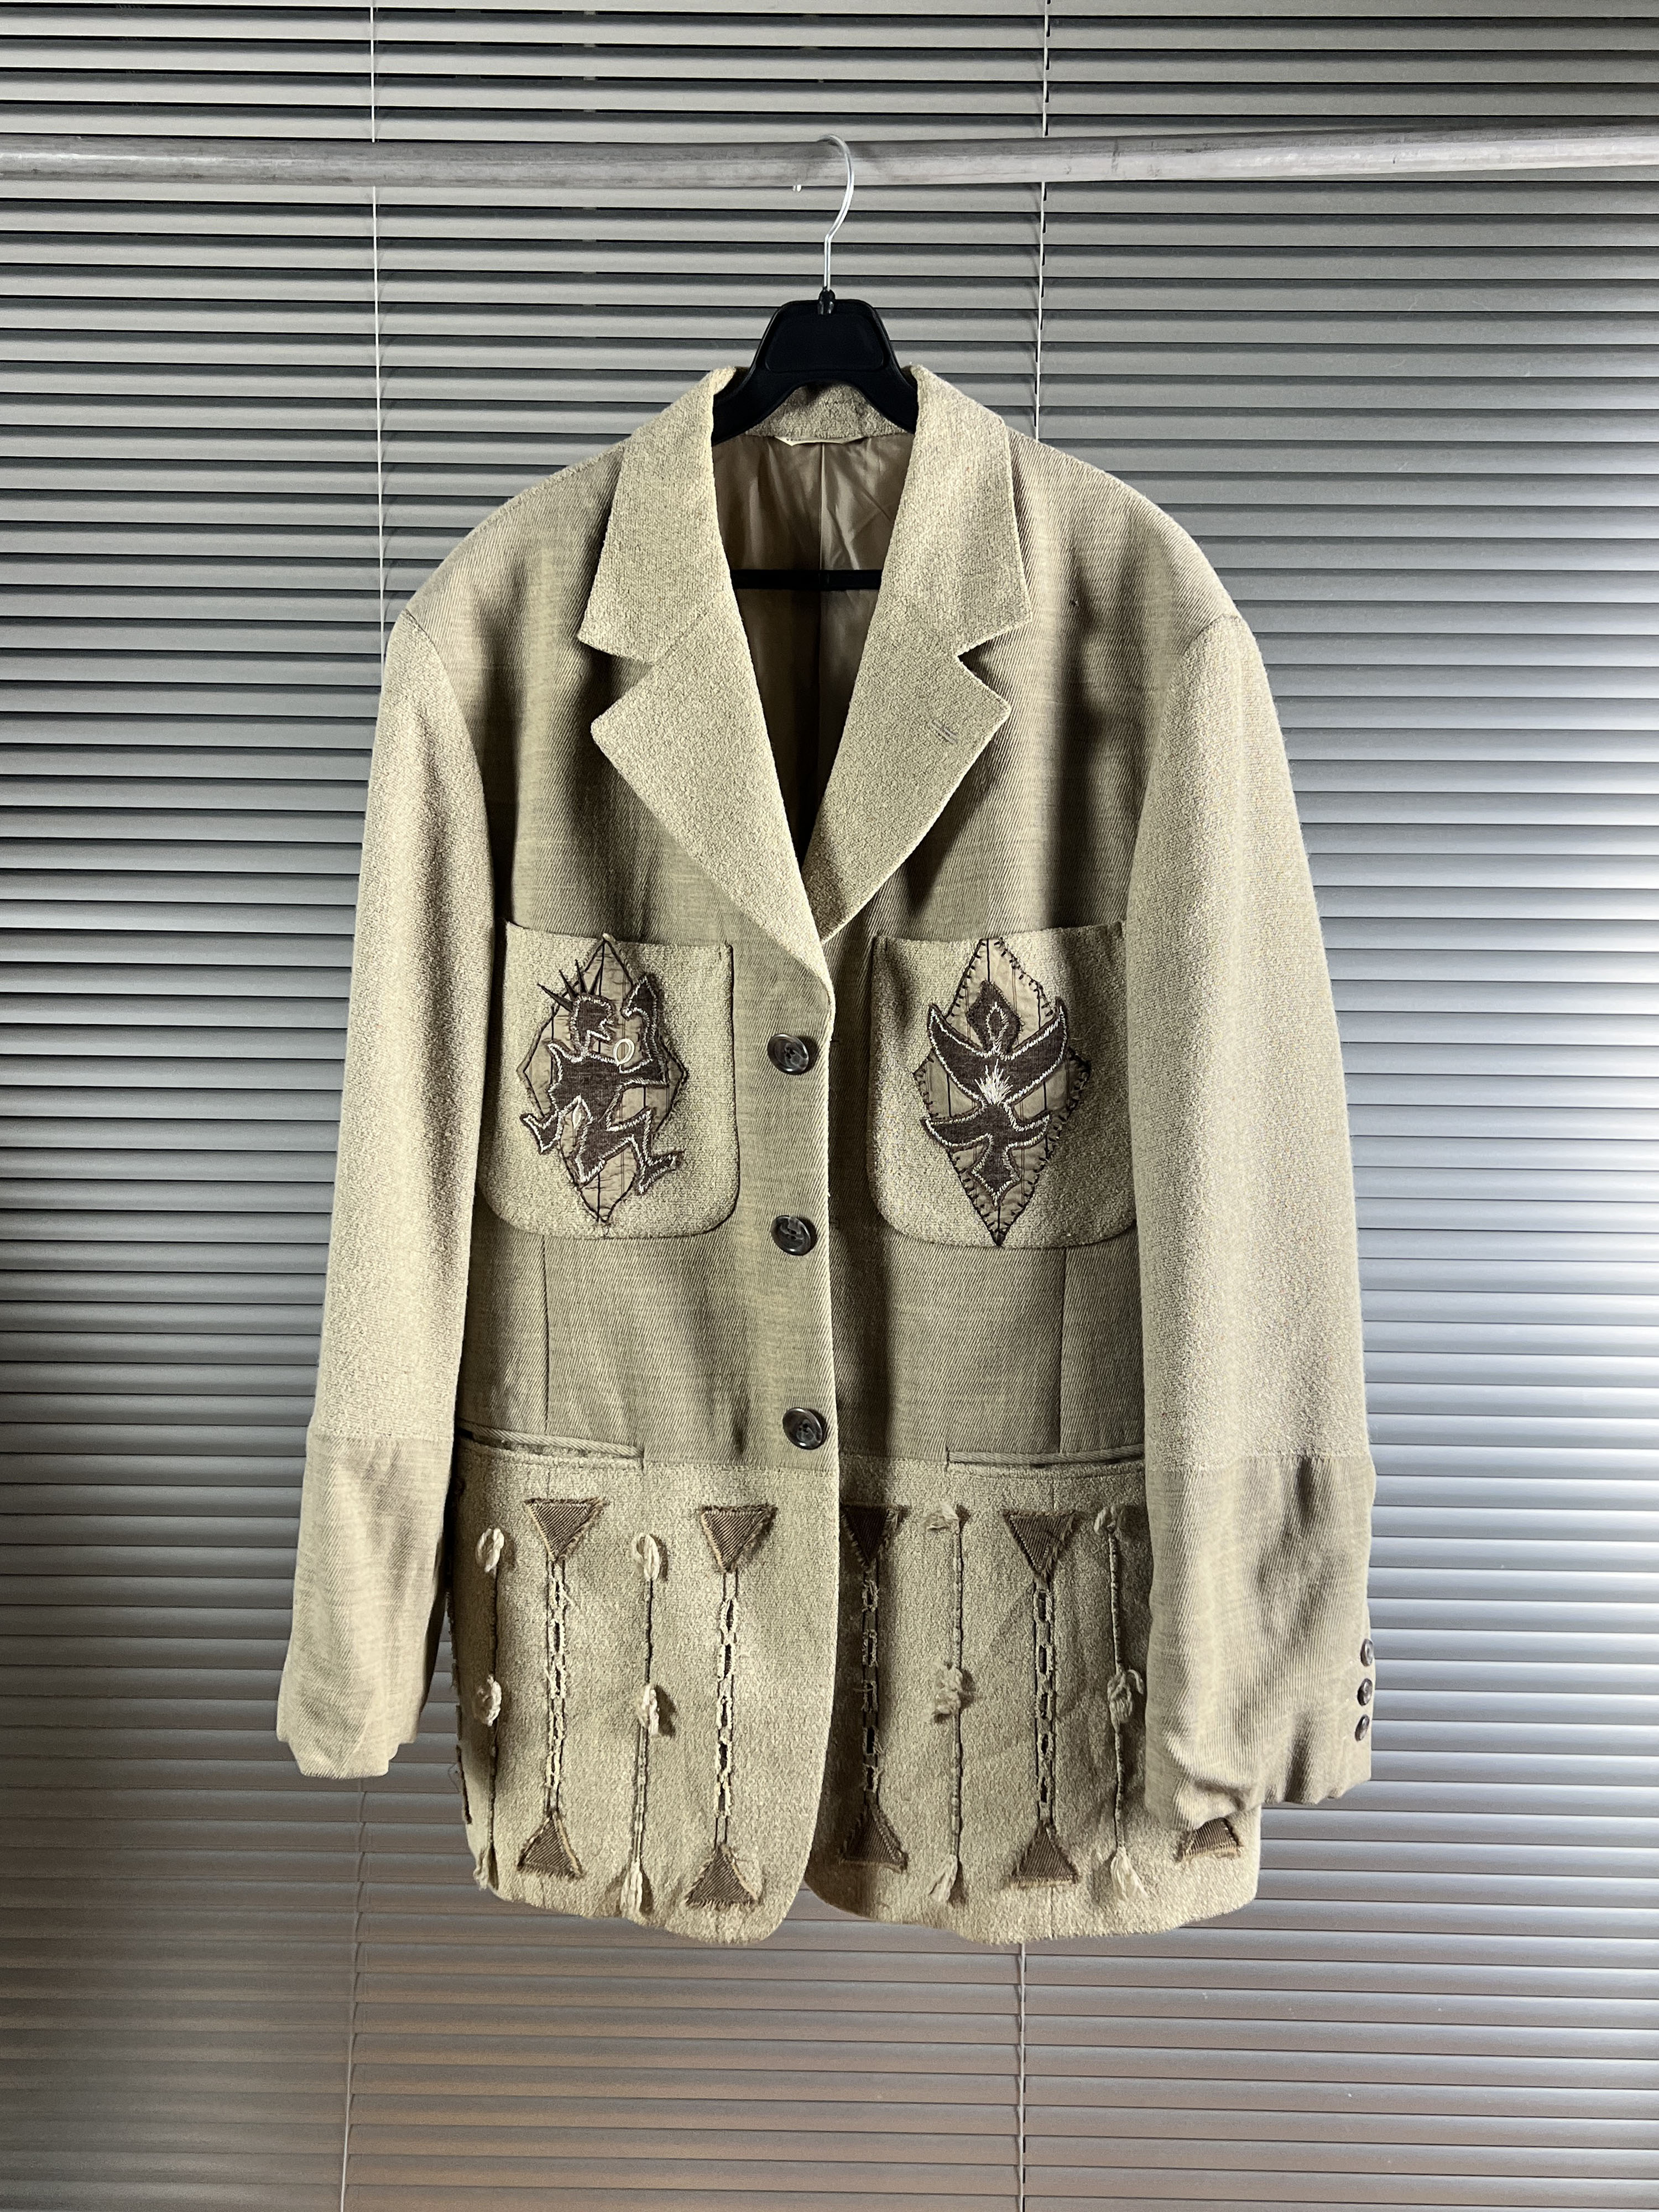 FICCE by yoshiyuki konishi pattern jacket